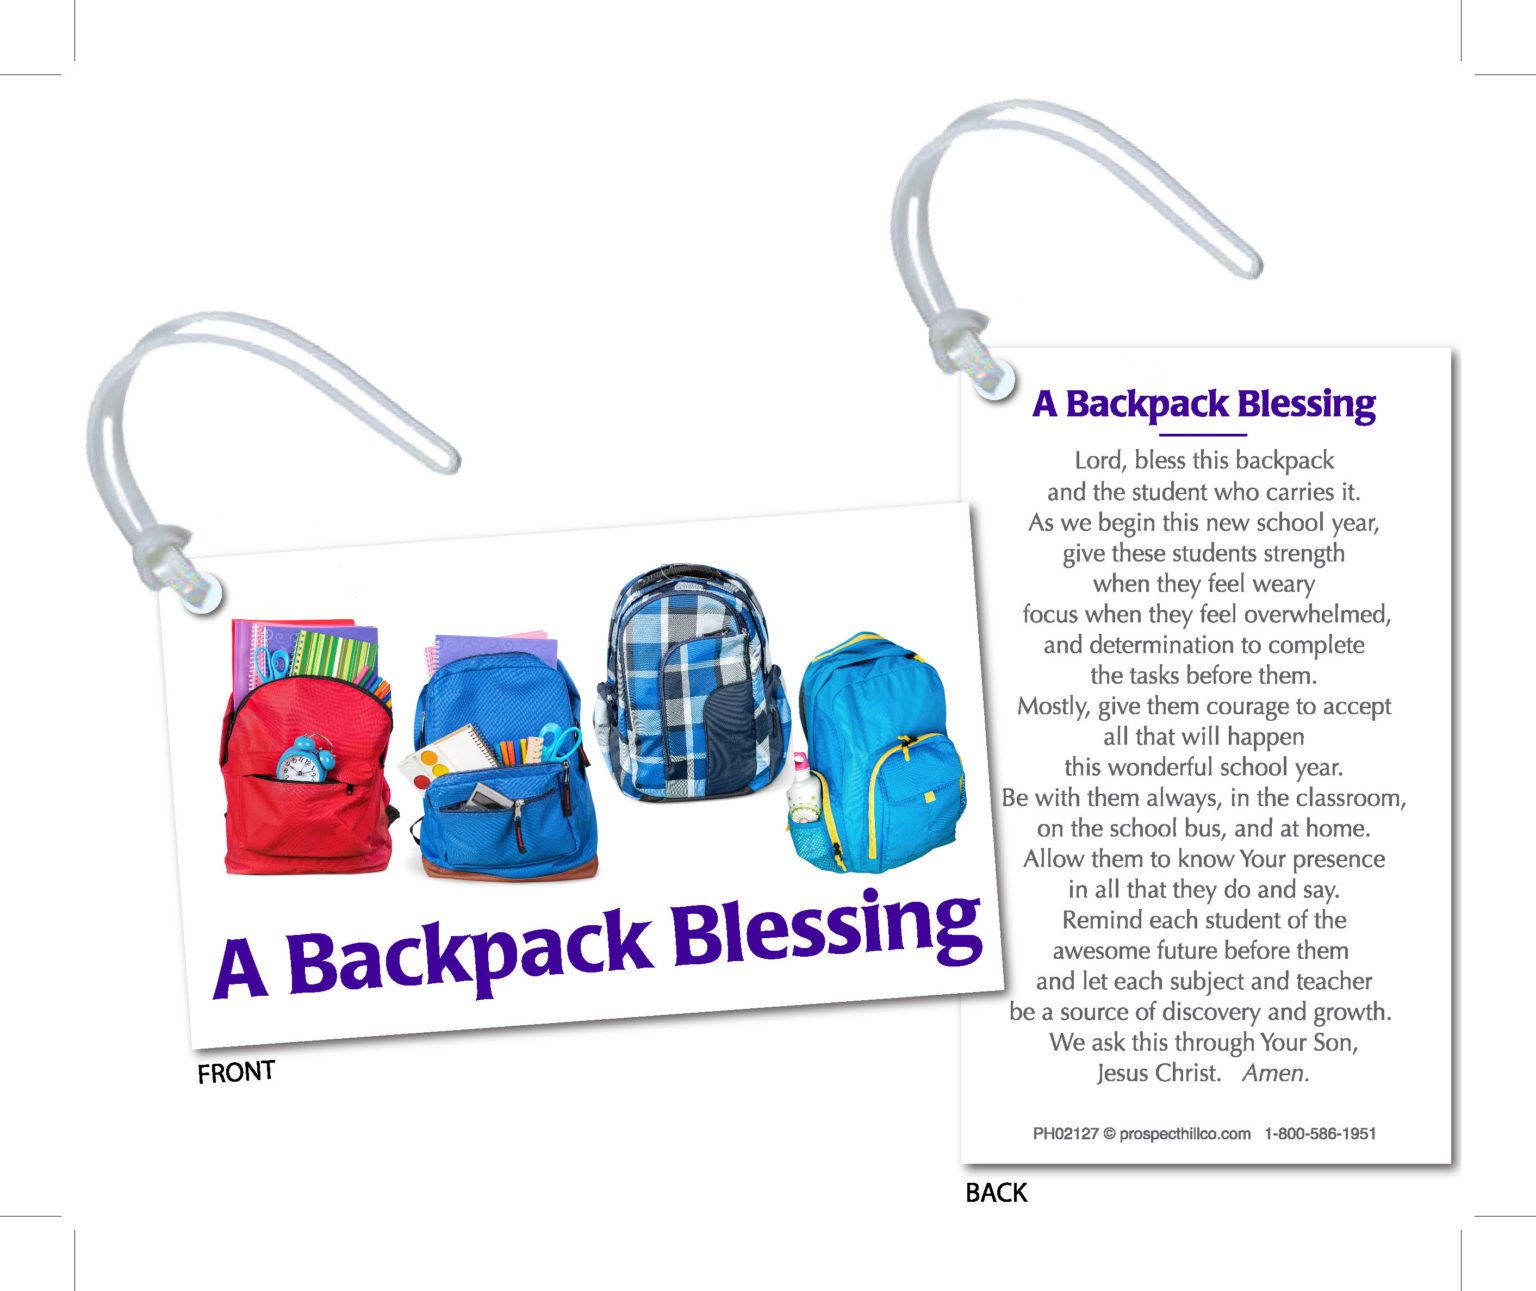 Backpack Blessing Prospect Hill Co.